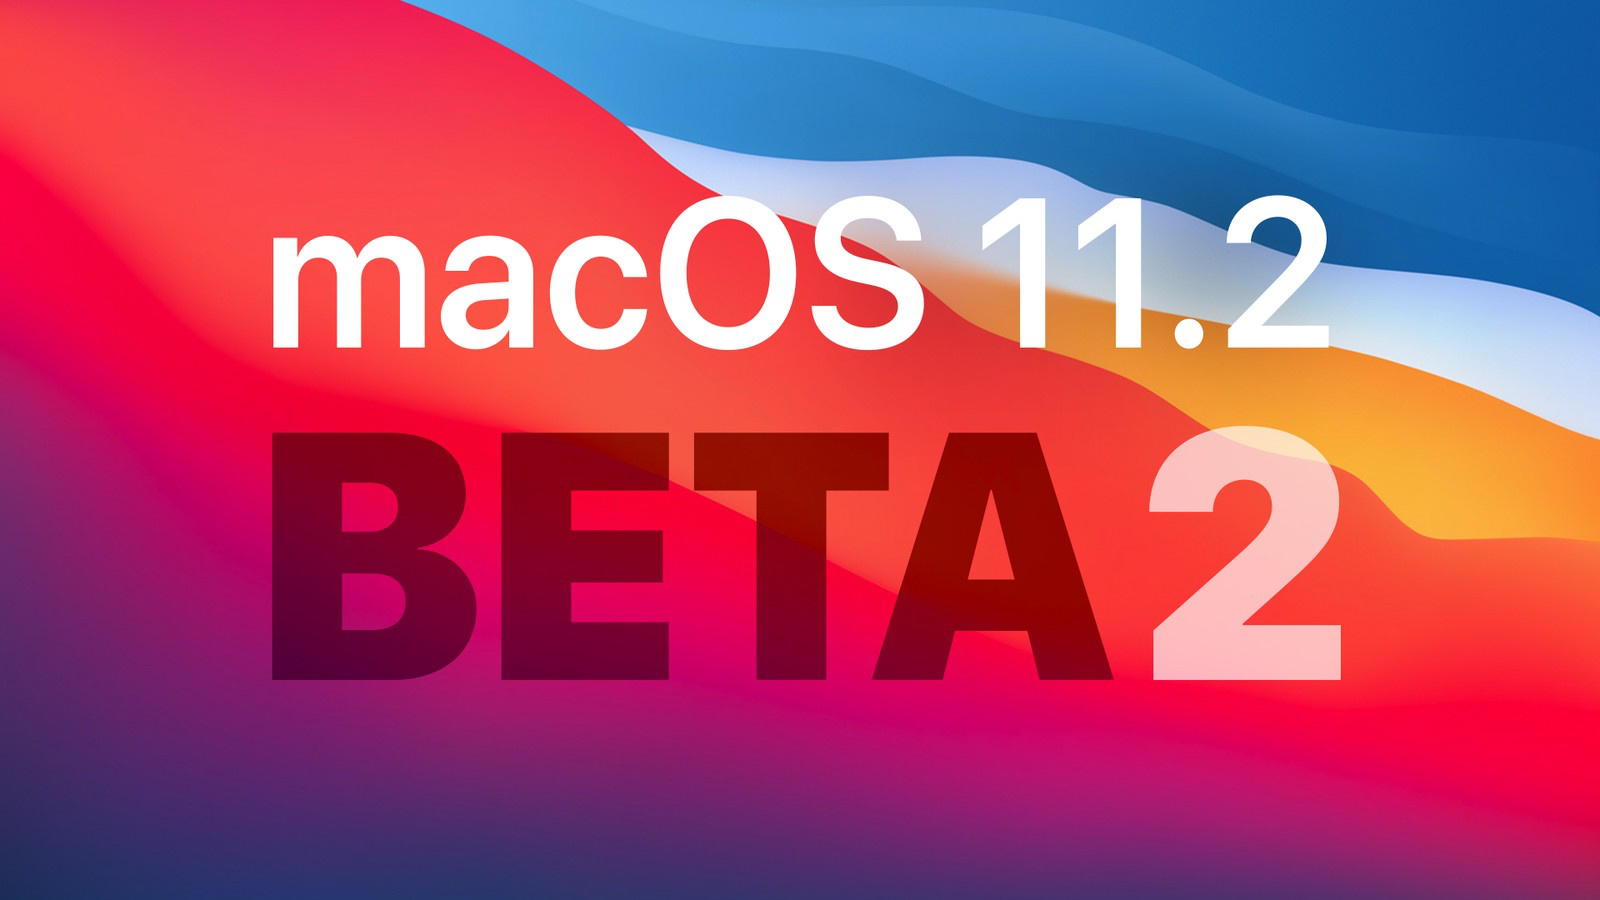 macOSBigSur11.2beta2更新了什么